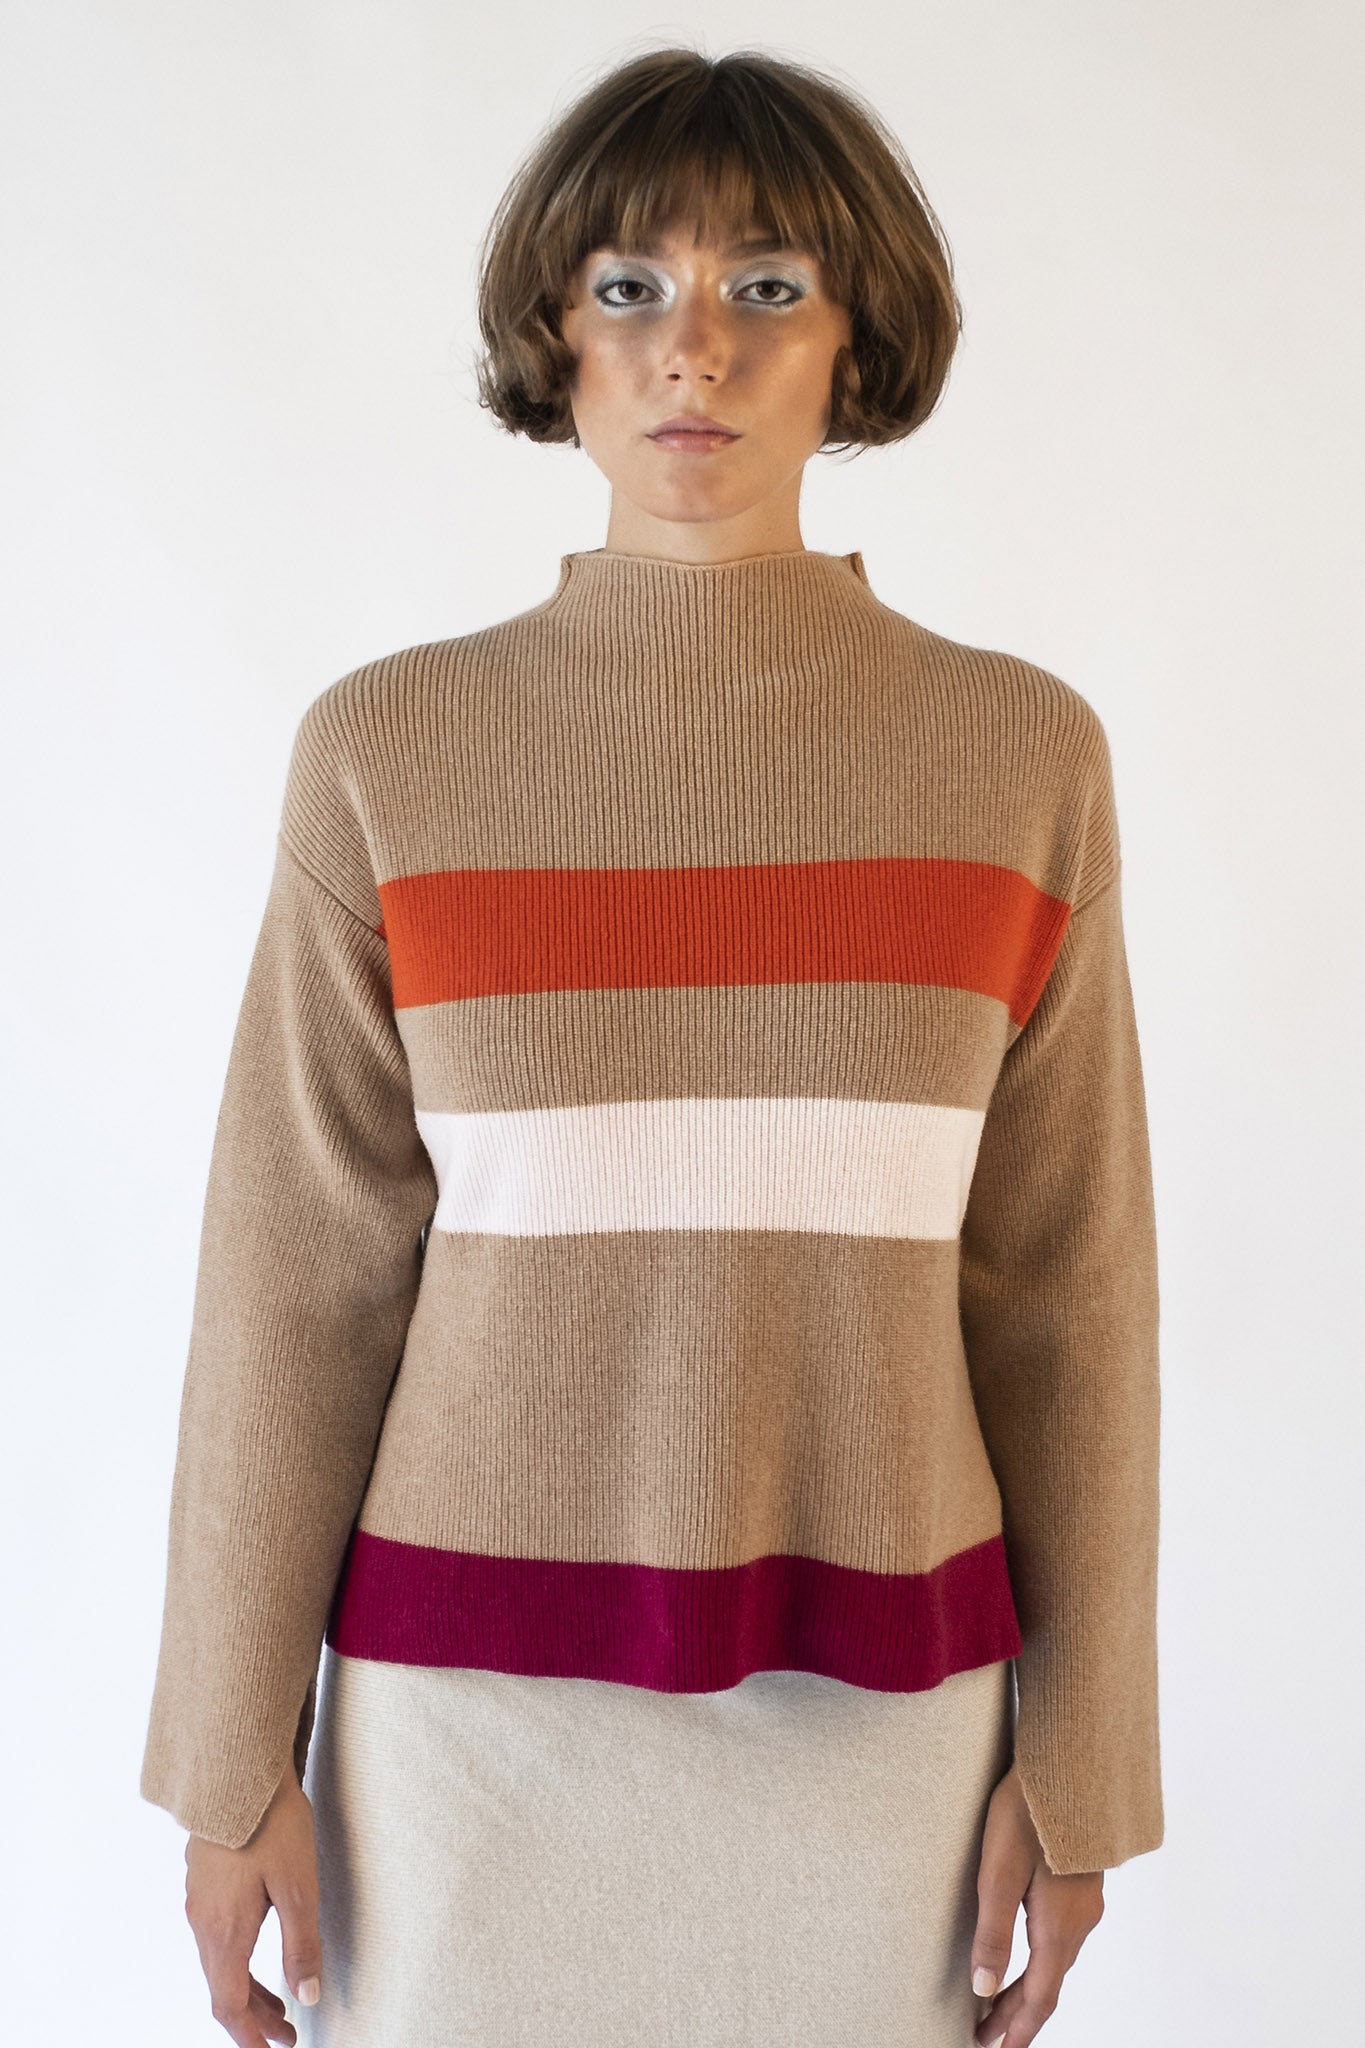 Beige striped sweater with Virginia crater neckline